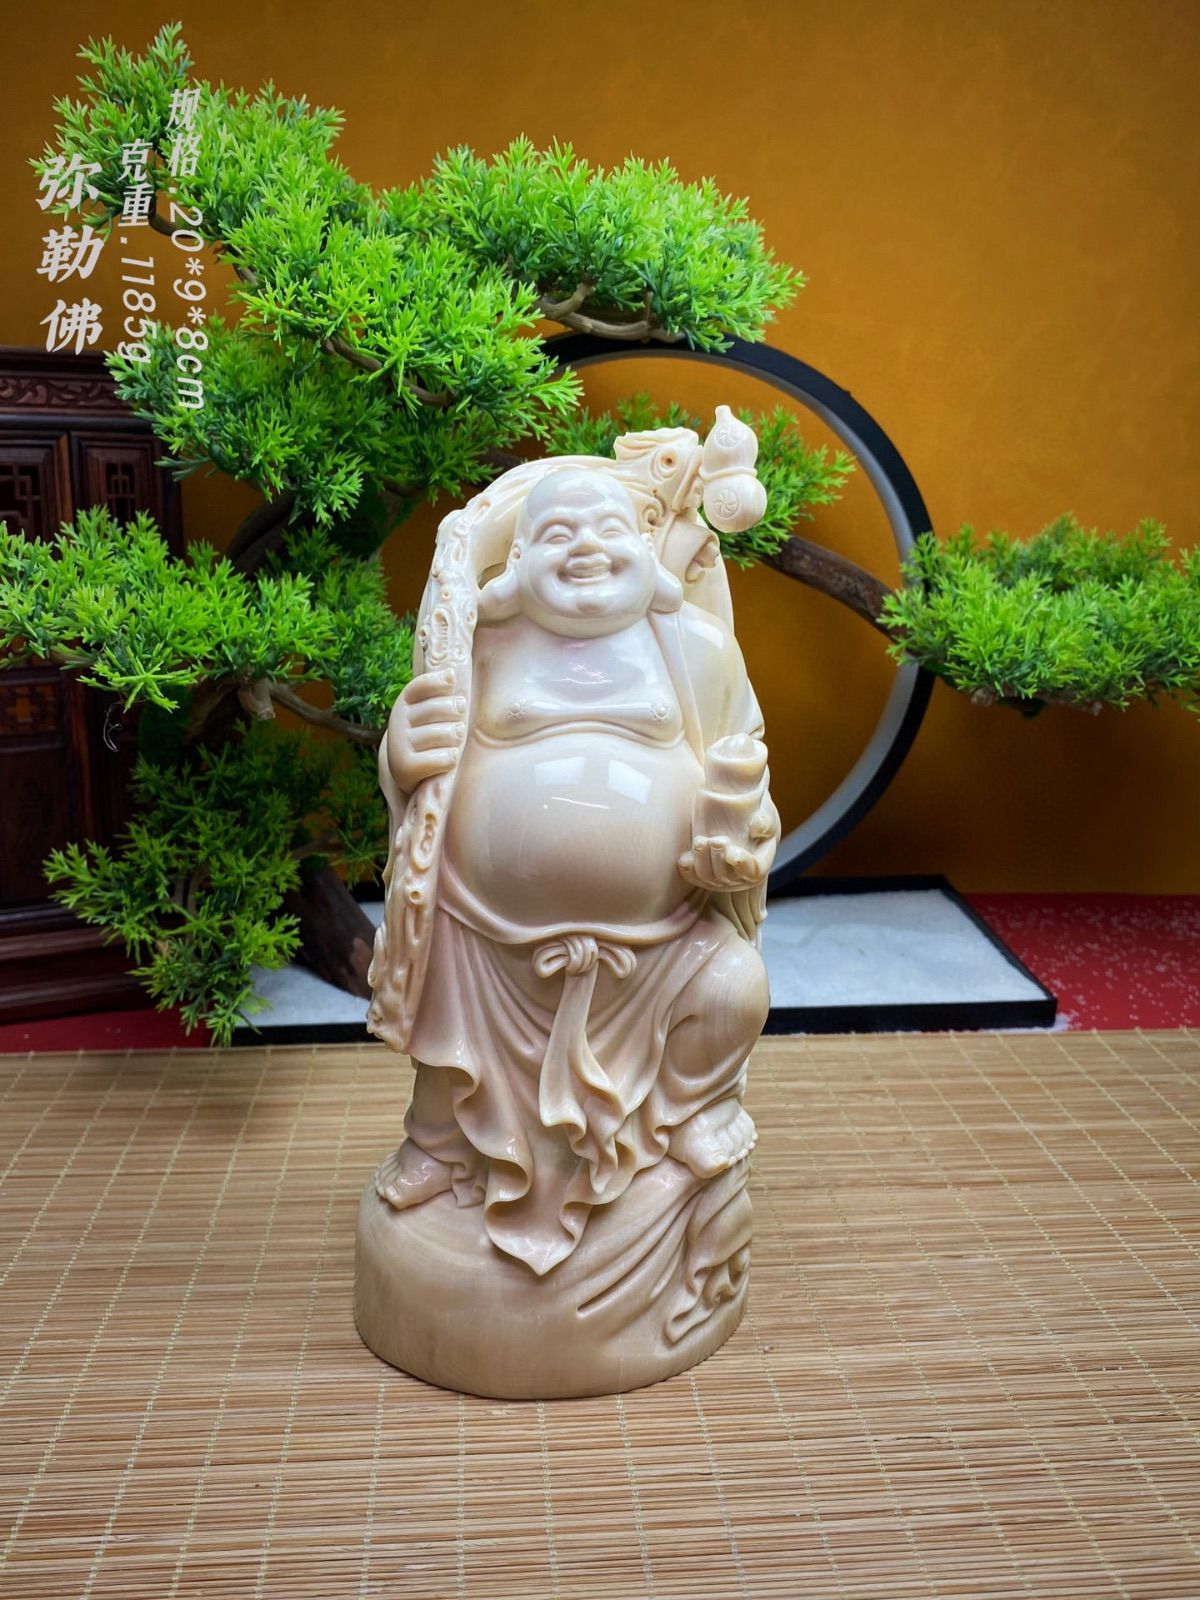 中国美術 置物 仏像 根付 時代物 天然素材 マンモス牙極上 - www